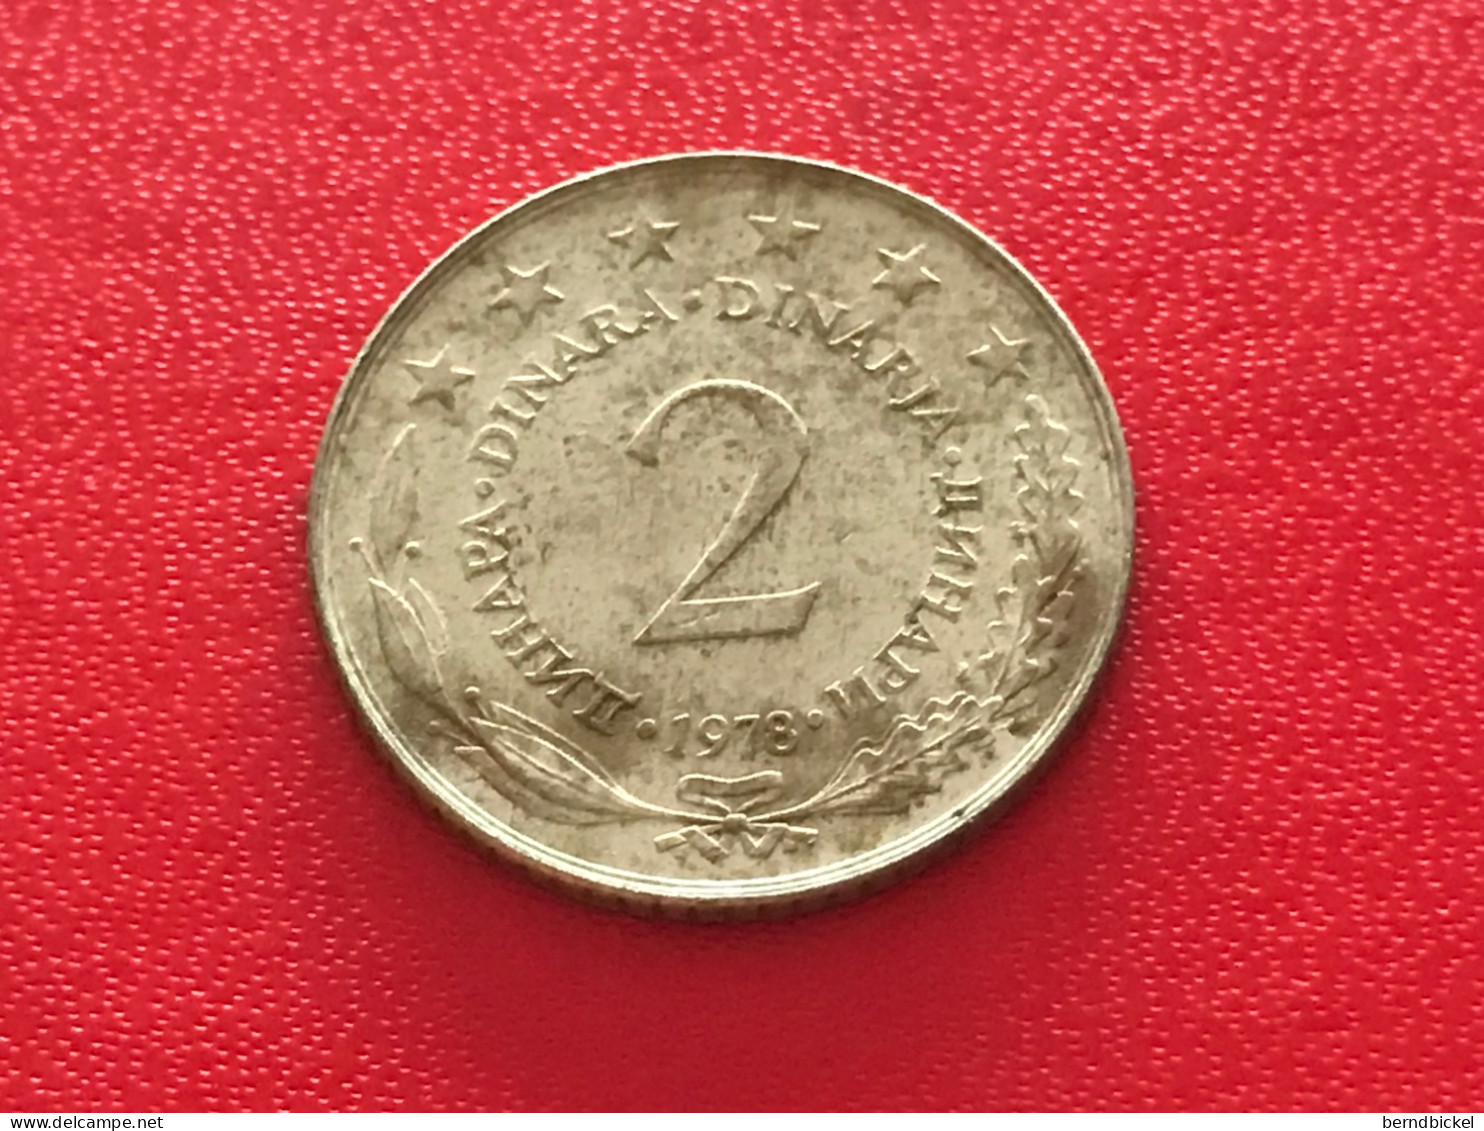 Münze Münzen Umlaufmünze Jugoslawien 2 Dinar 1978 - Yougoslavie